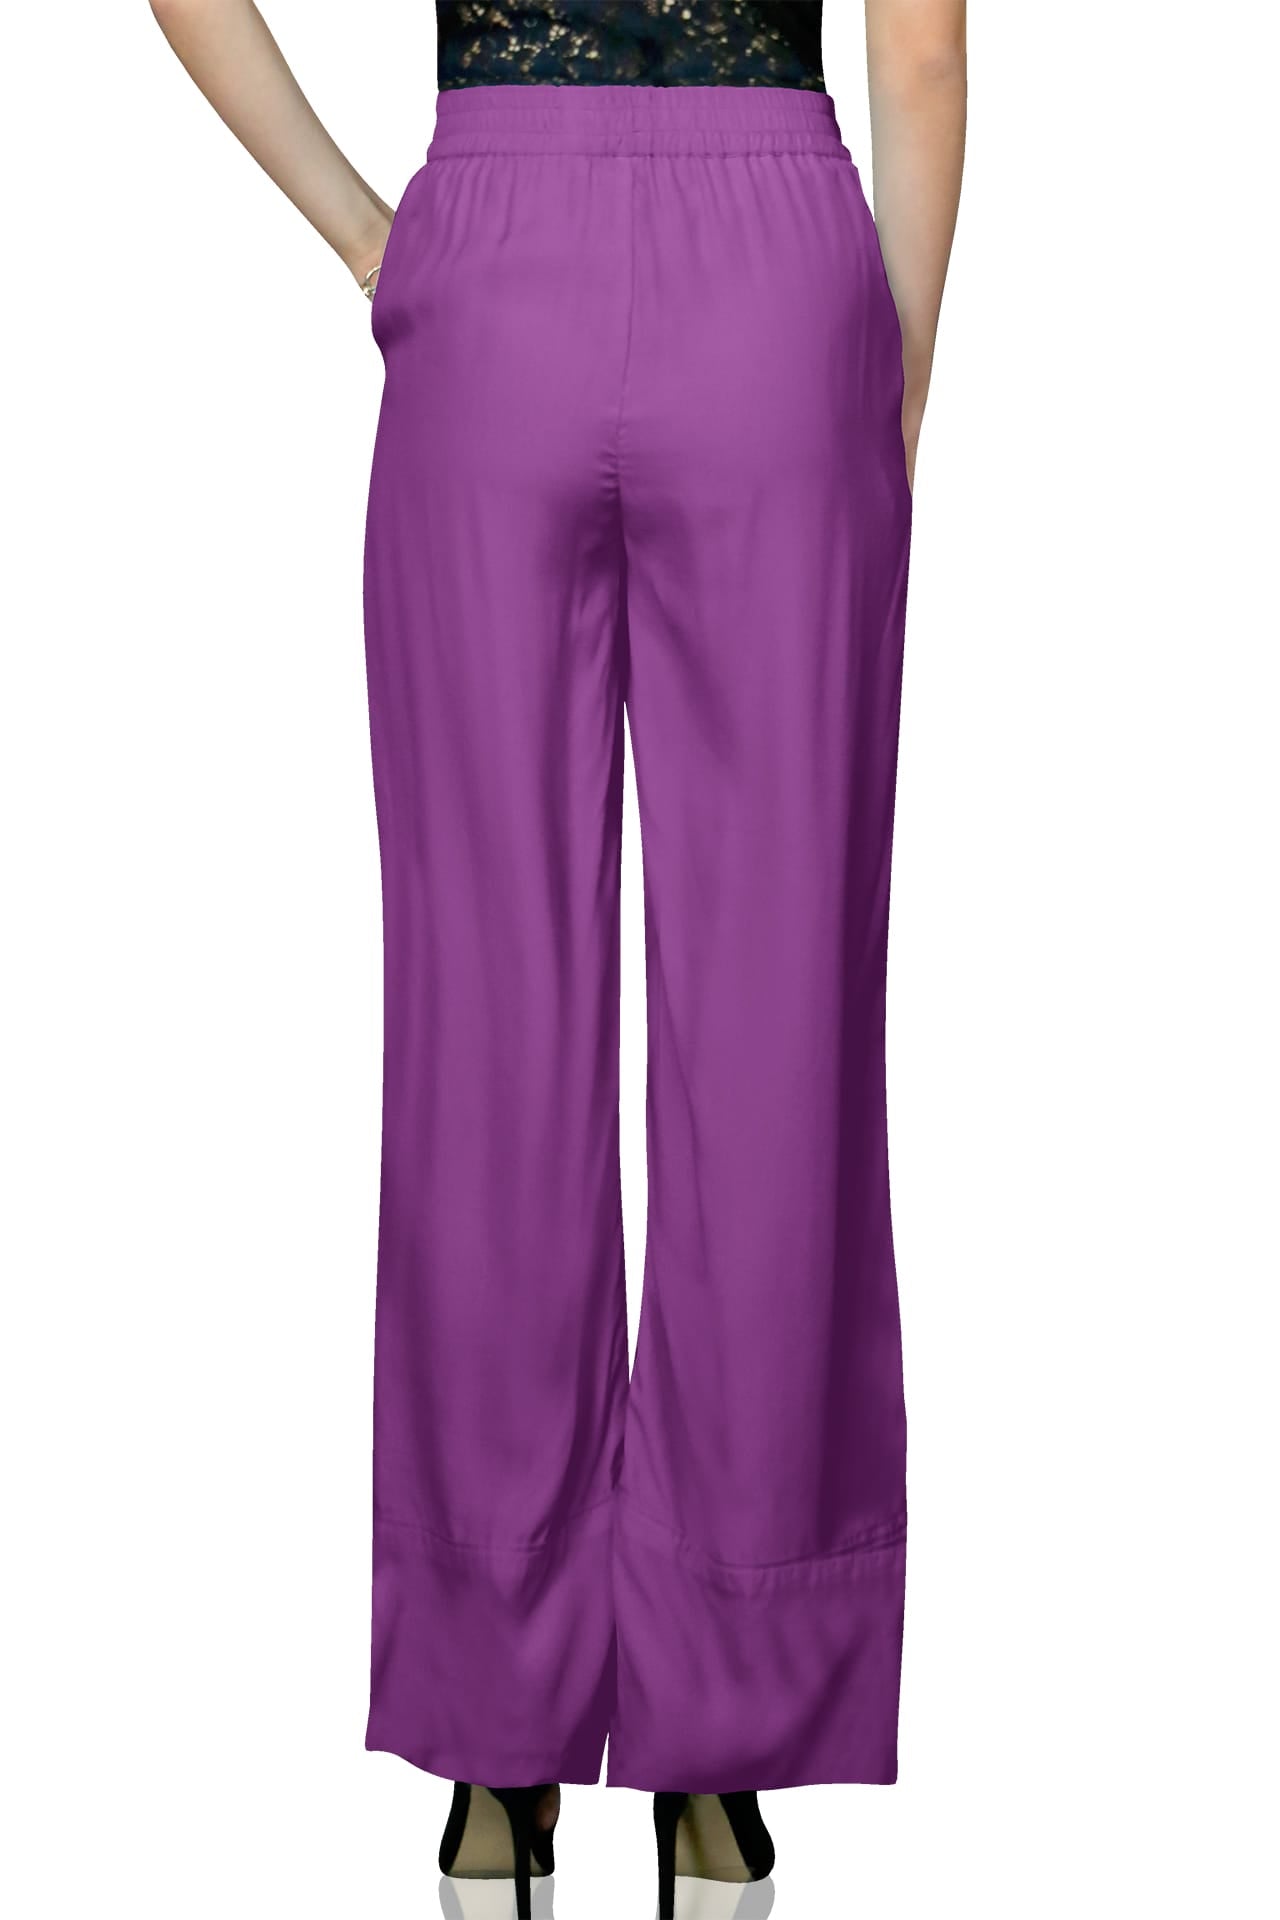 "womens plazzo pants" "straight leg dress pants" "Kyle X Shahida" "purple high waisted pants" 